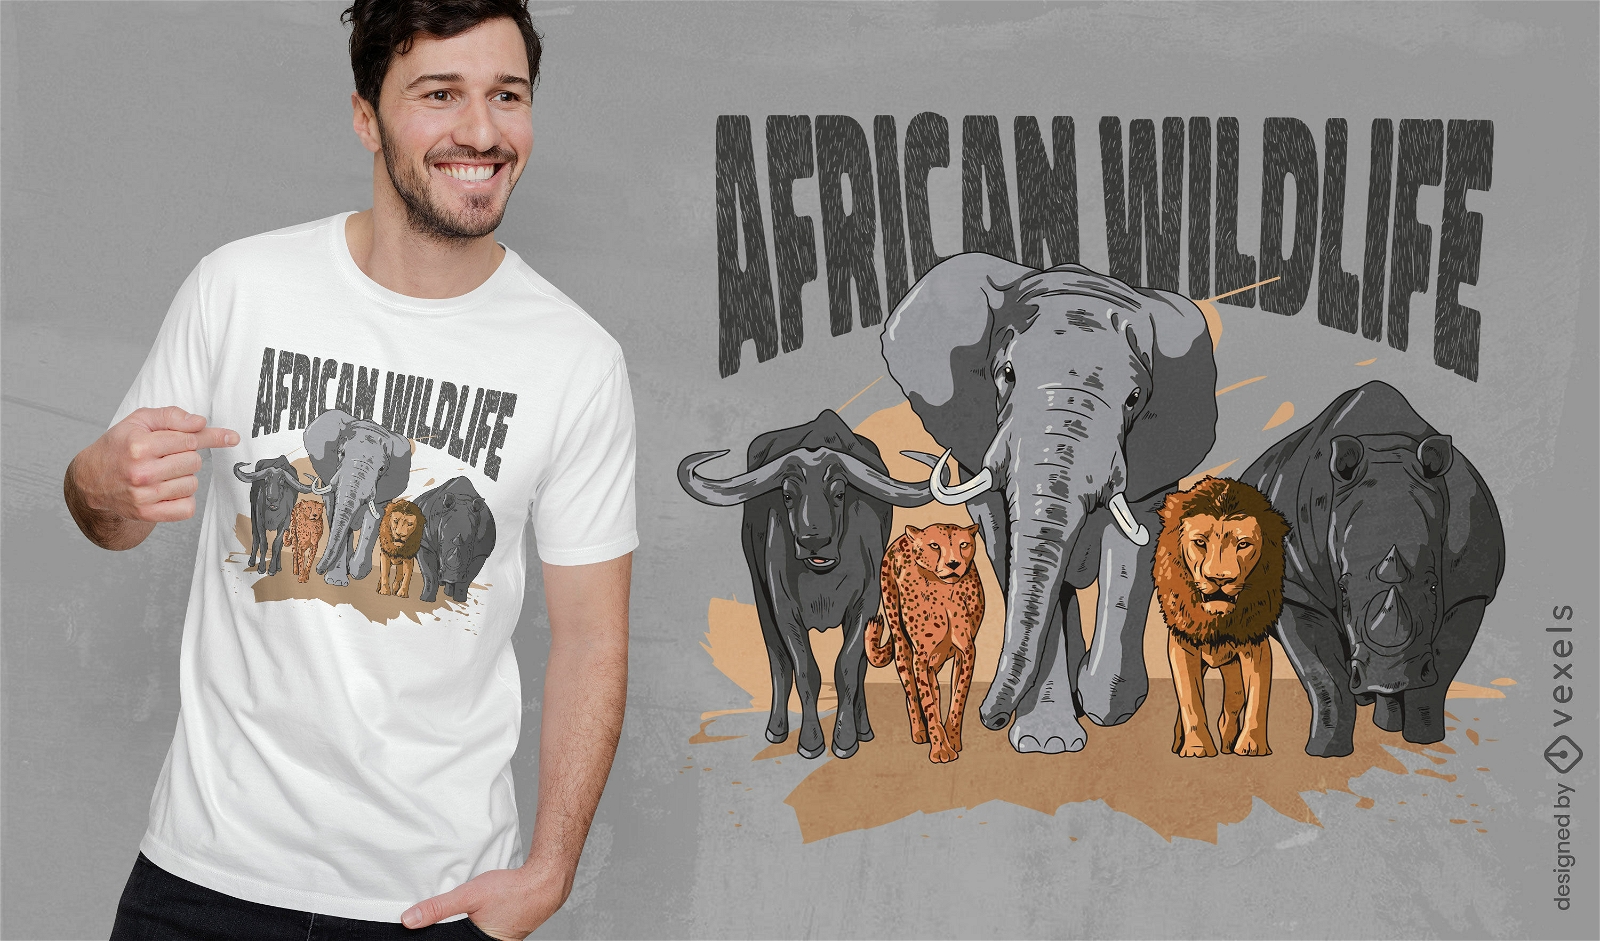 Dise?o de camiseta de vida salvaje africana.